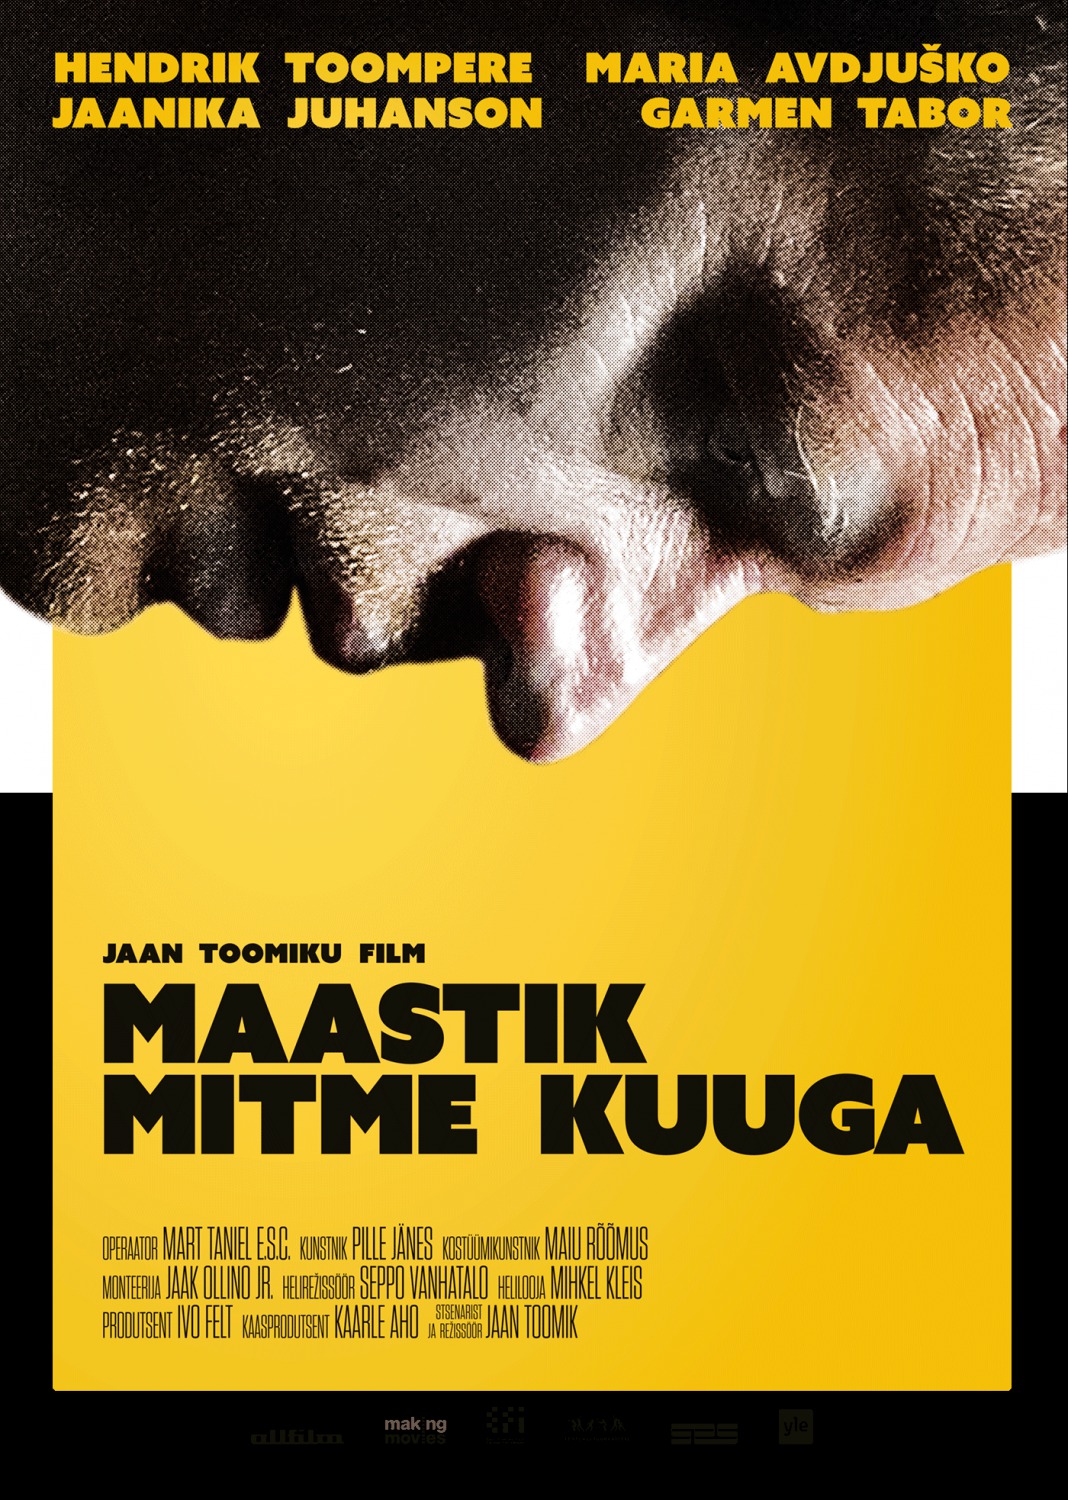 Extra Large Movie Poster Image for Maastik mitme kuuga 